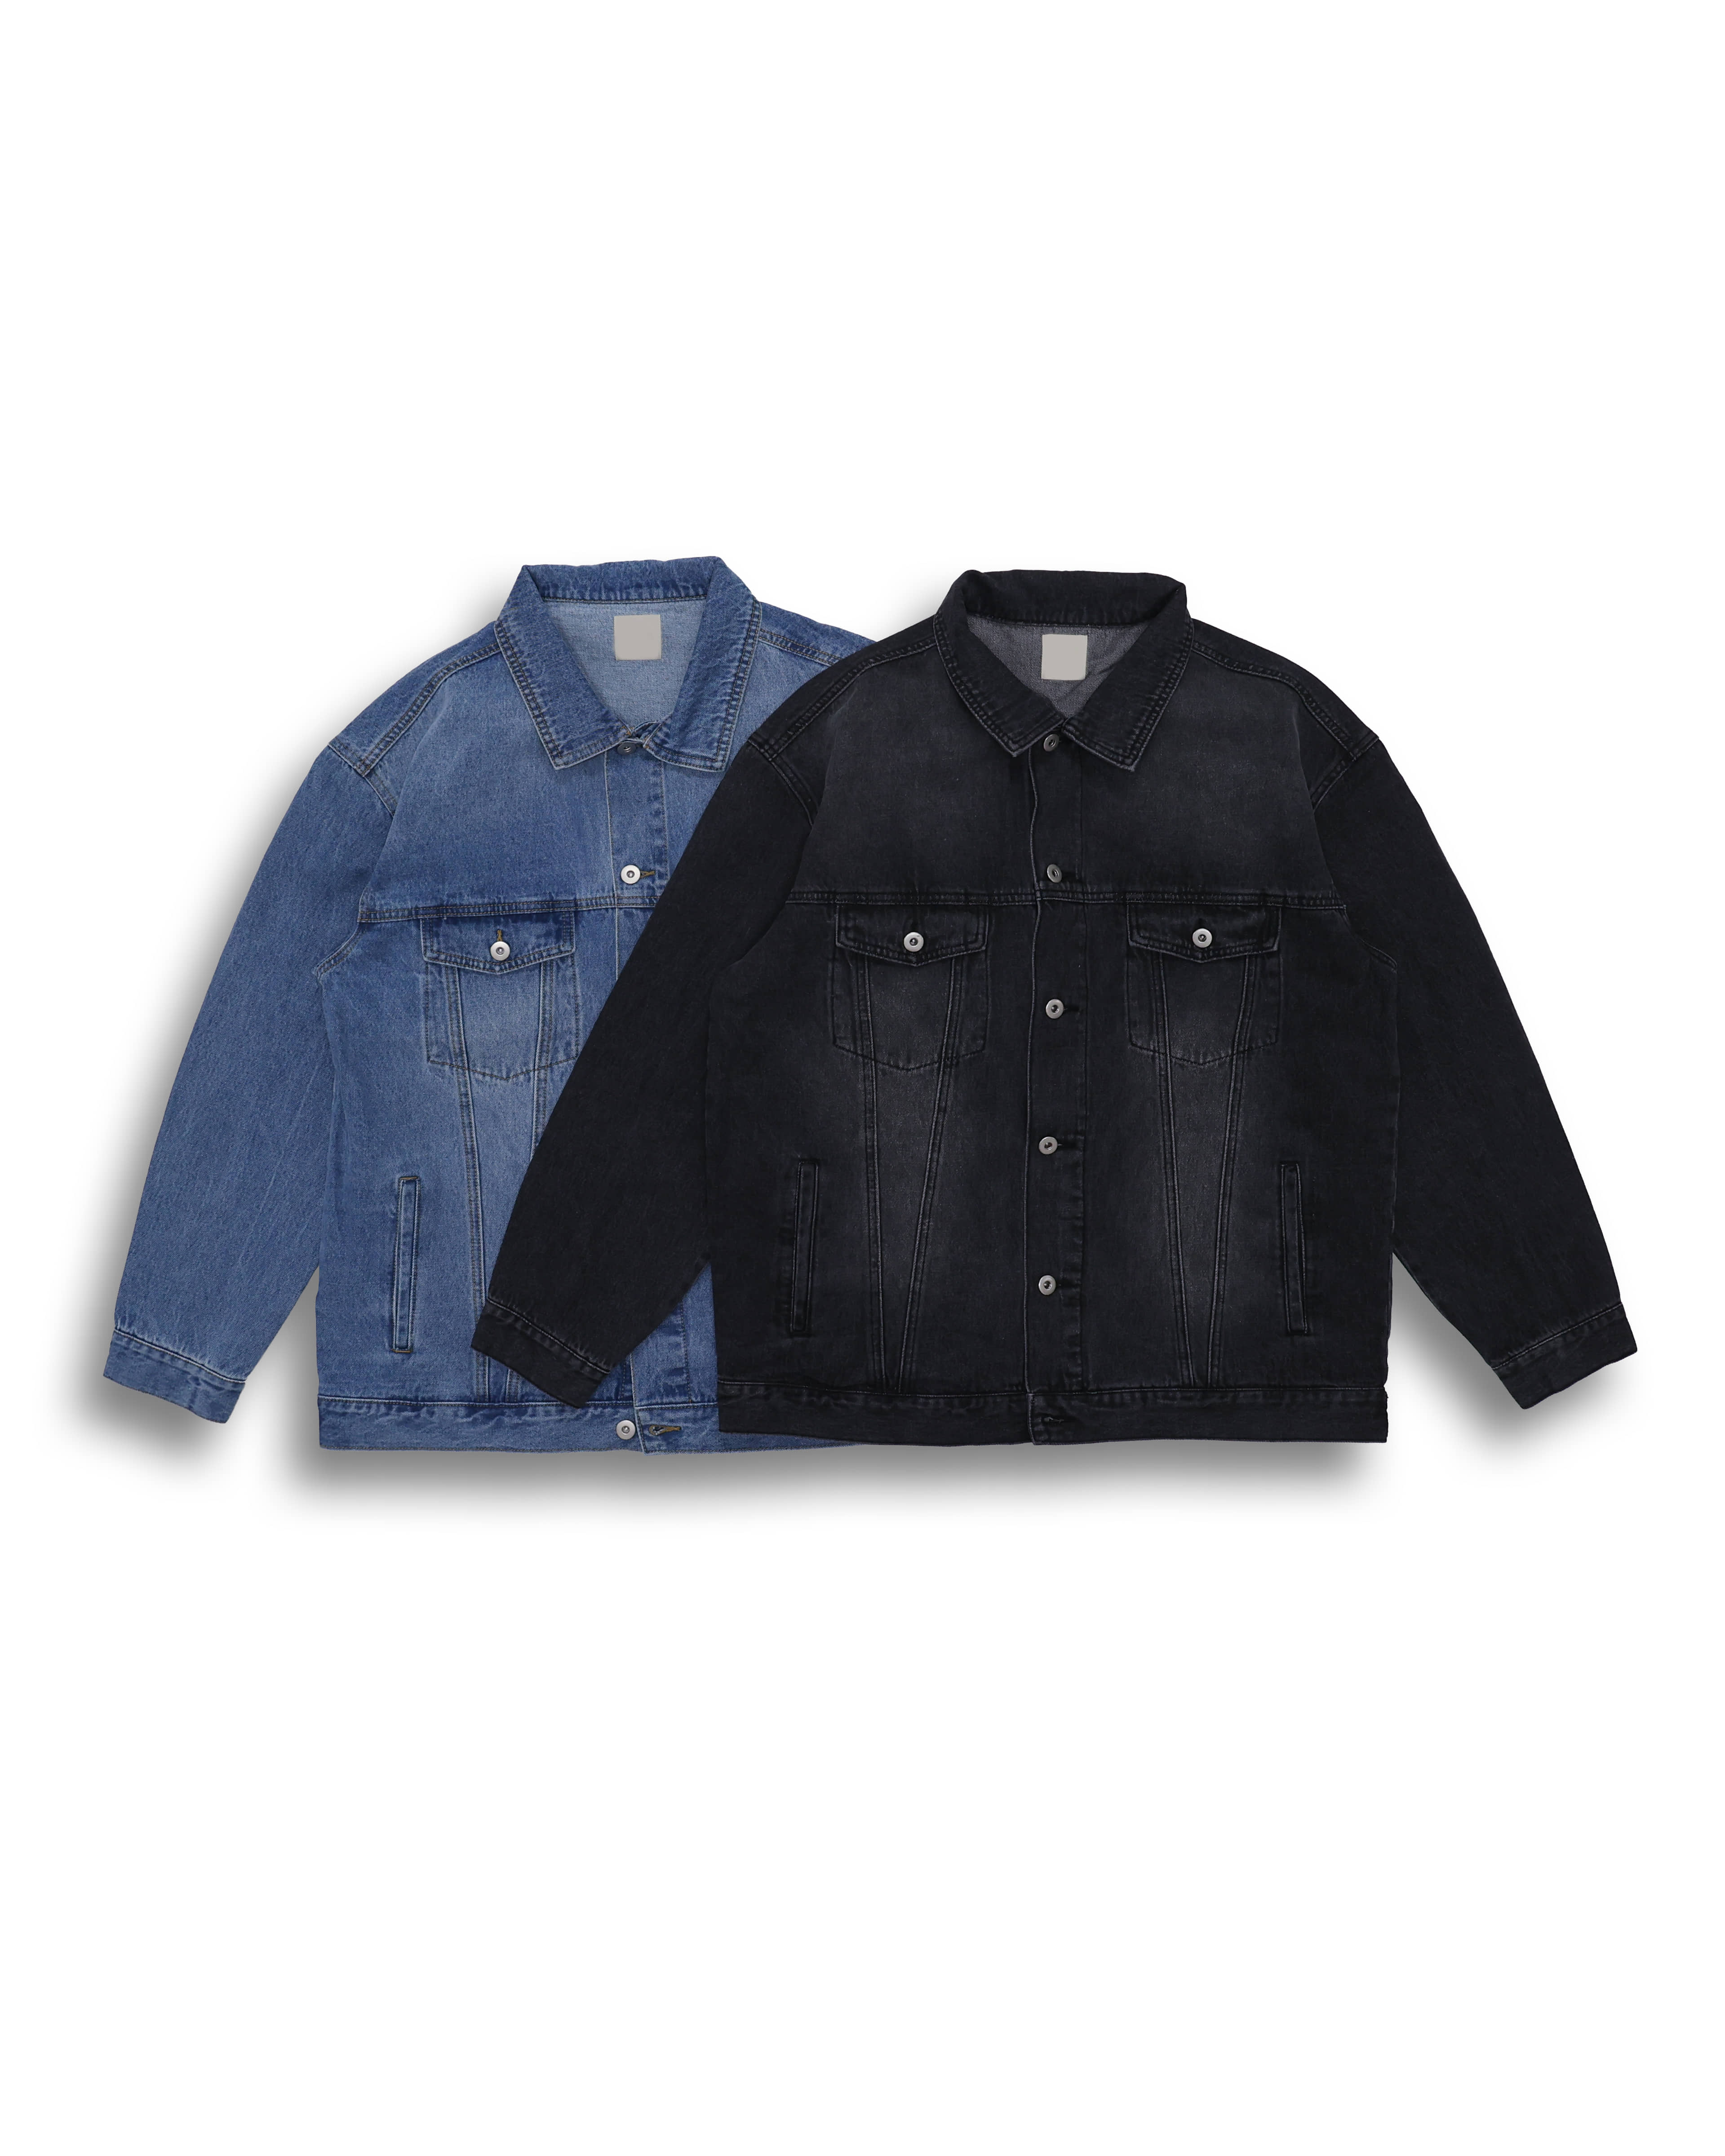 ORIGIN Washing Denim Work Jacket (Black Denim/Middle Blue)